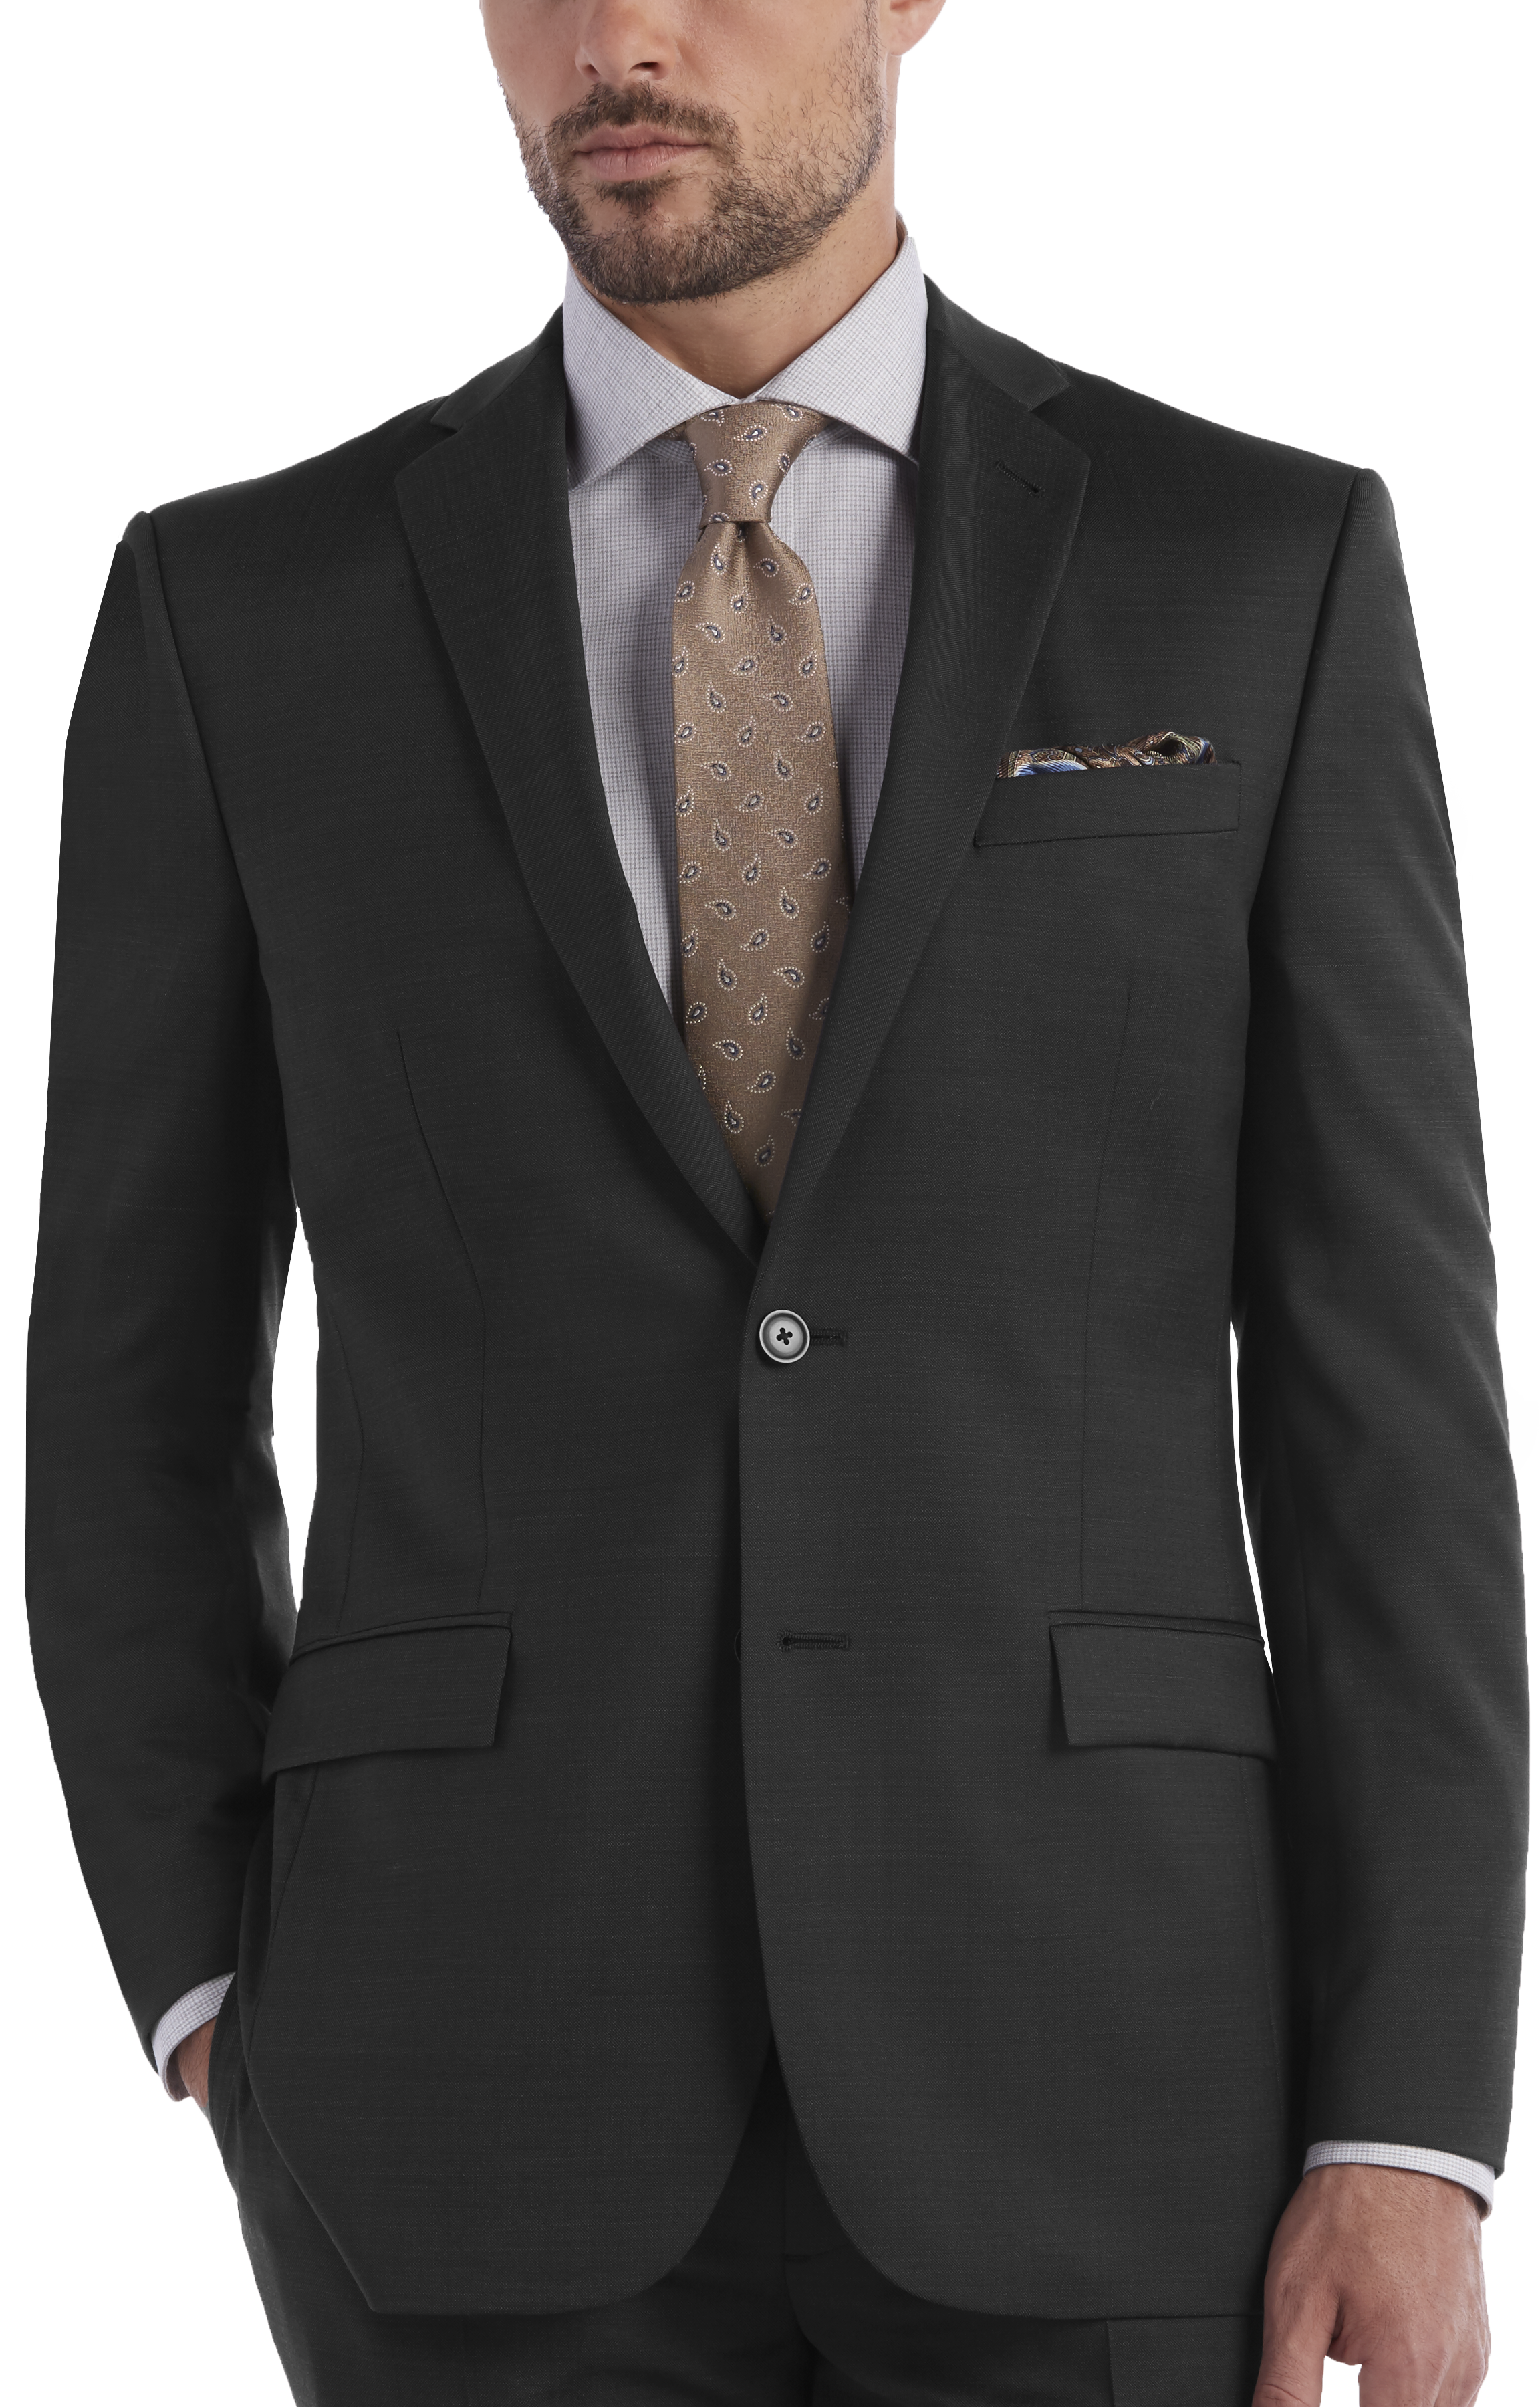 Charcoal Gray Suit | Men's Wearhouse